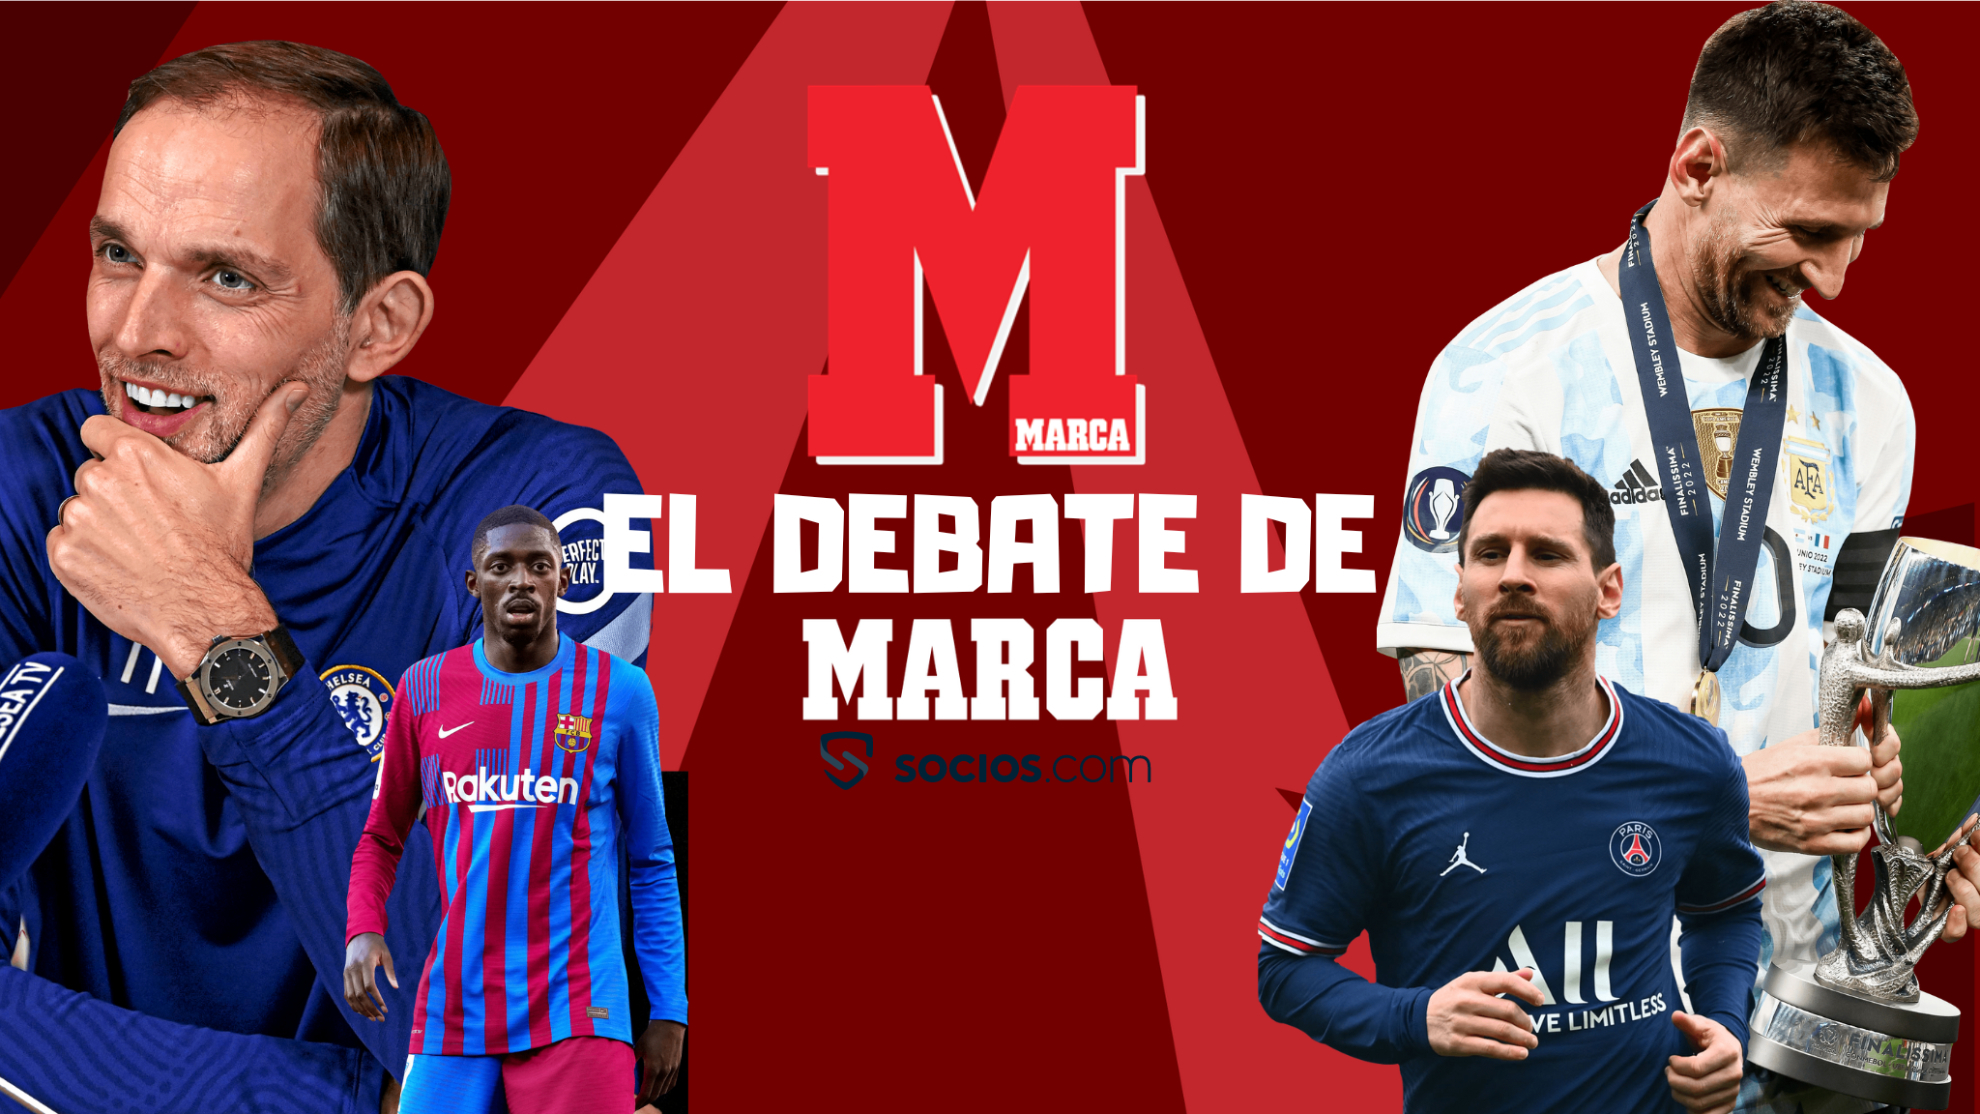 El debate de MARCA #6: "El PSG espera al mejor Messi"